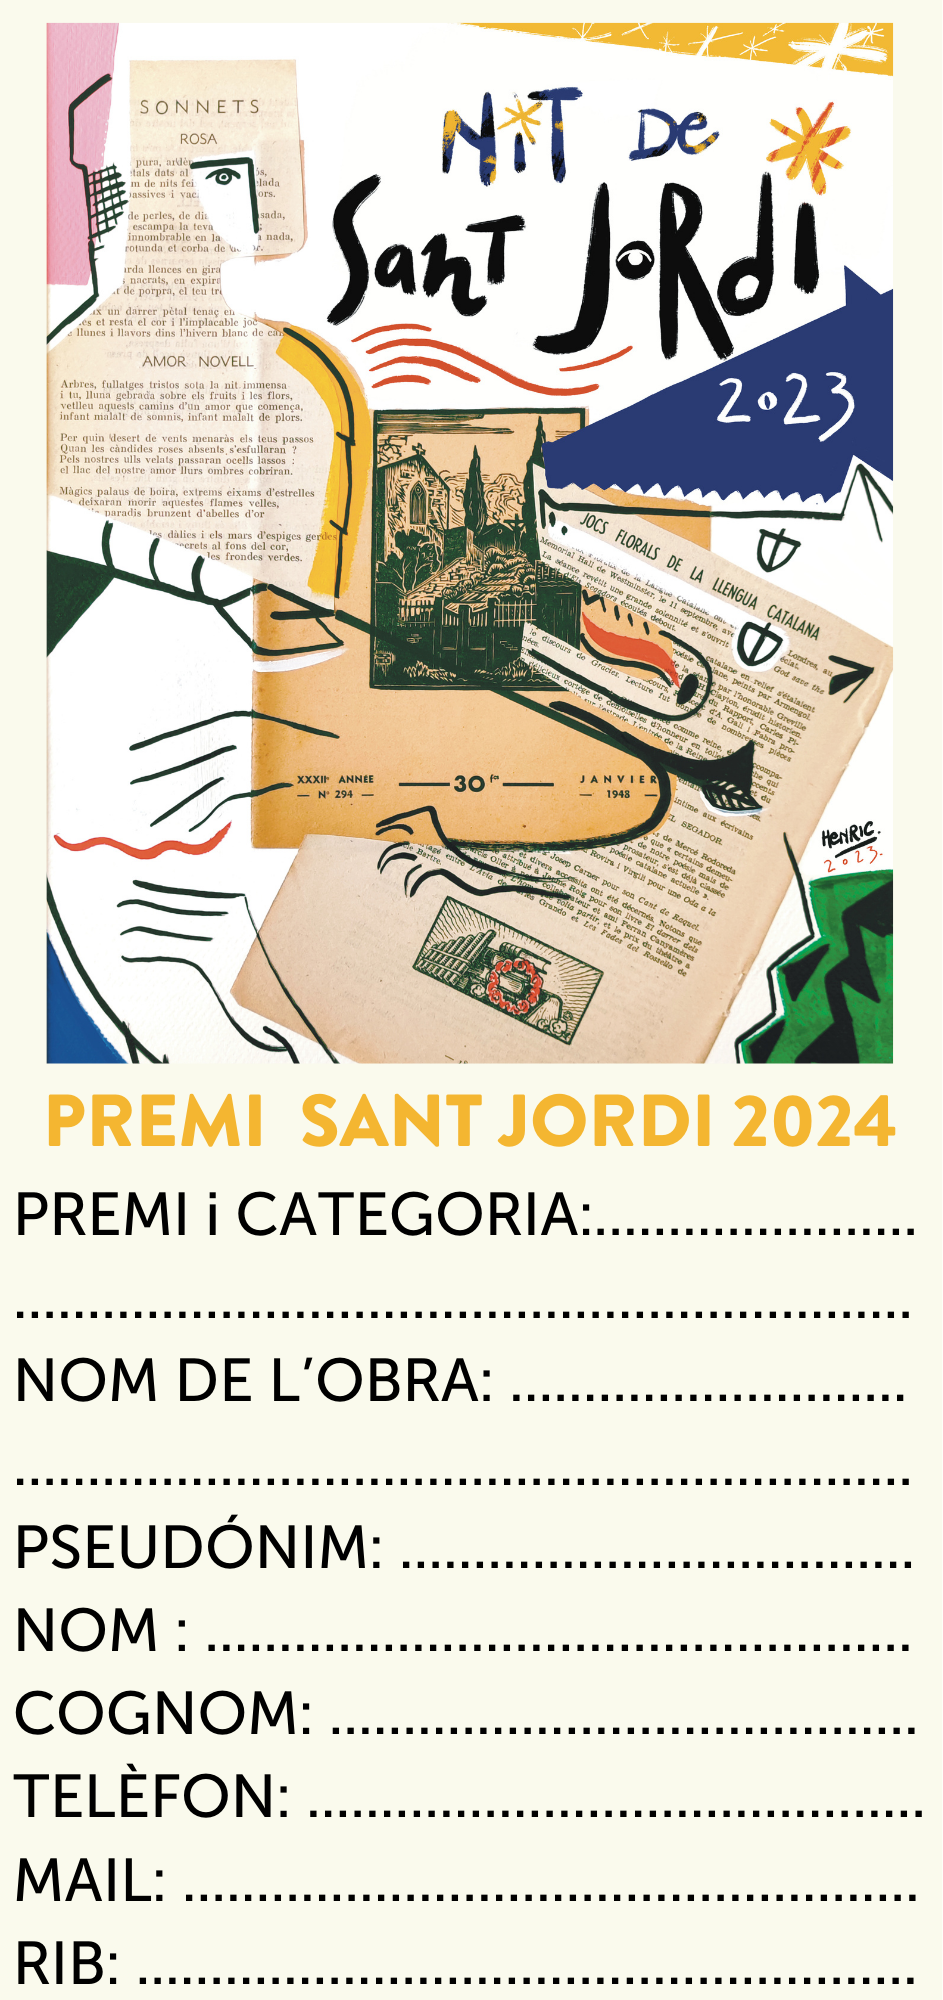 Cartell de Sant Jordi 2023